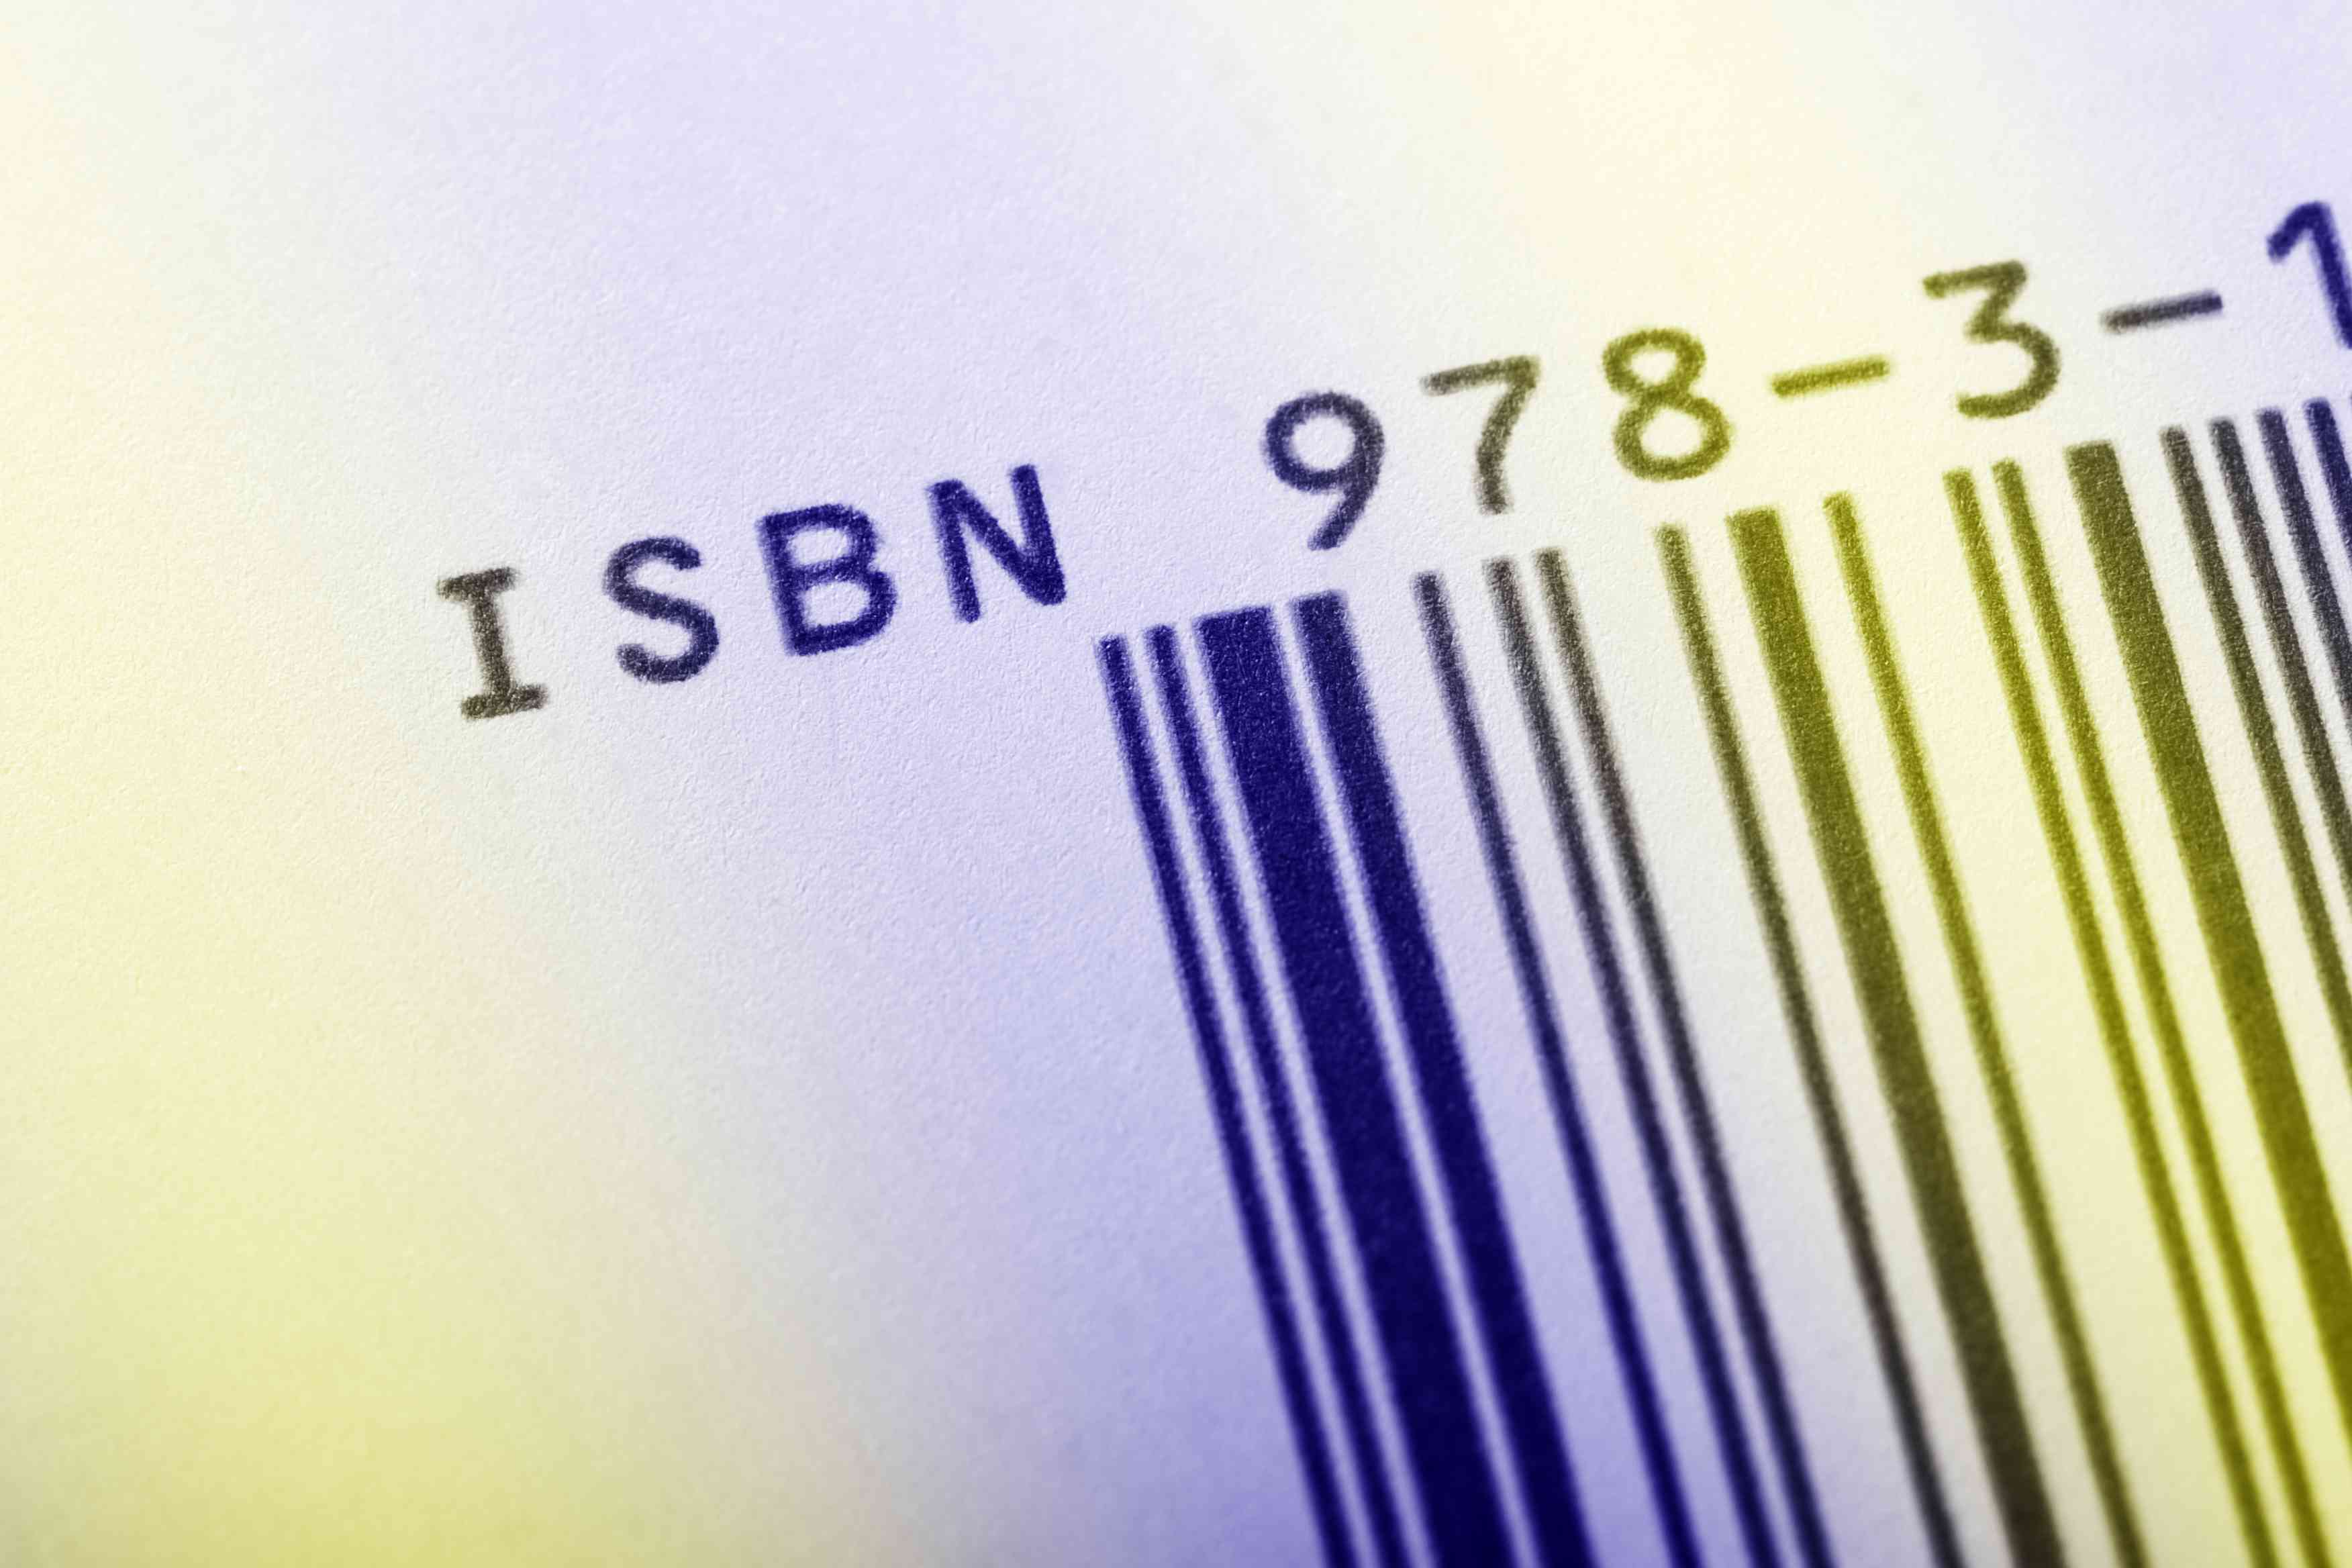 Kód ISBN na knize